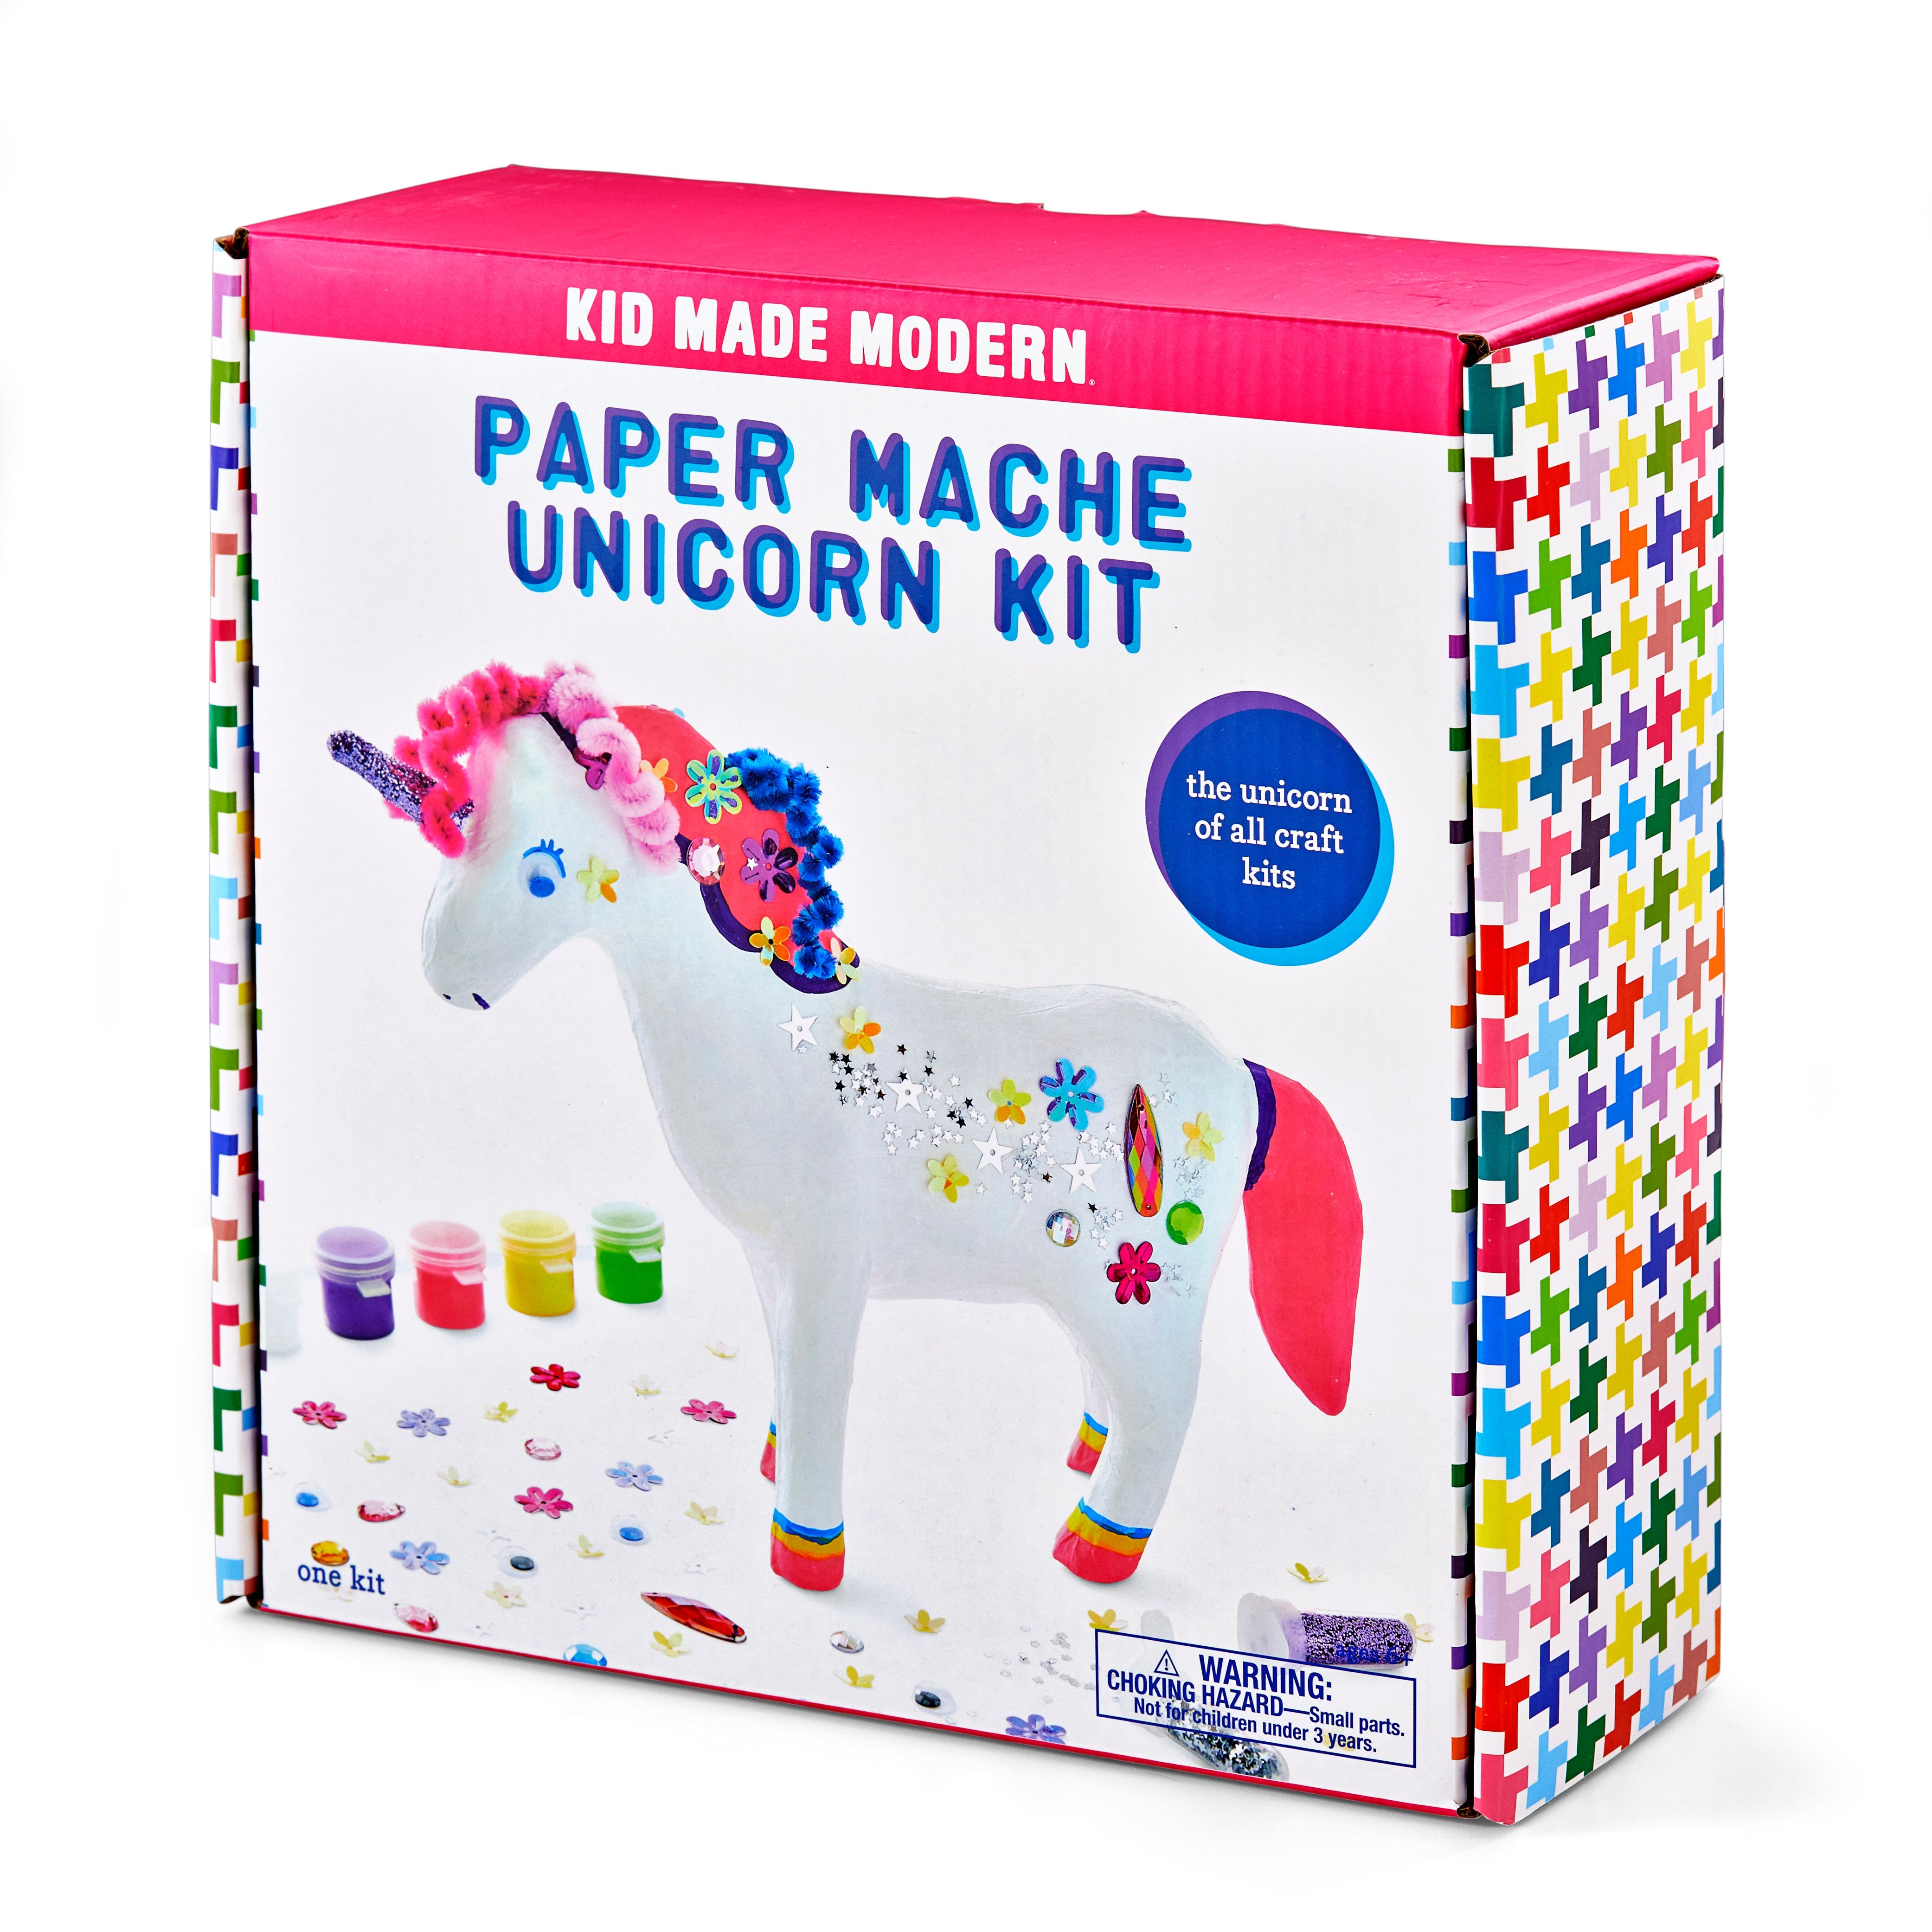 Kid Made Modern Paper Mache Unicorn Kit Crafts